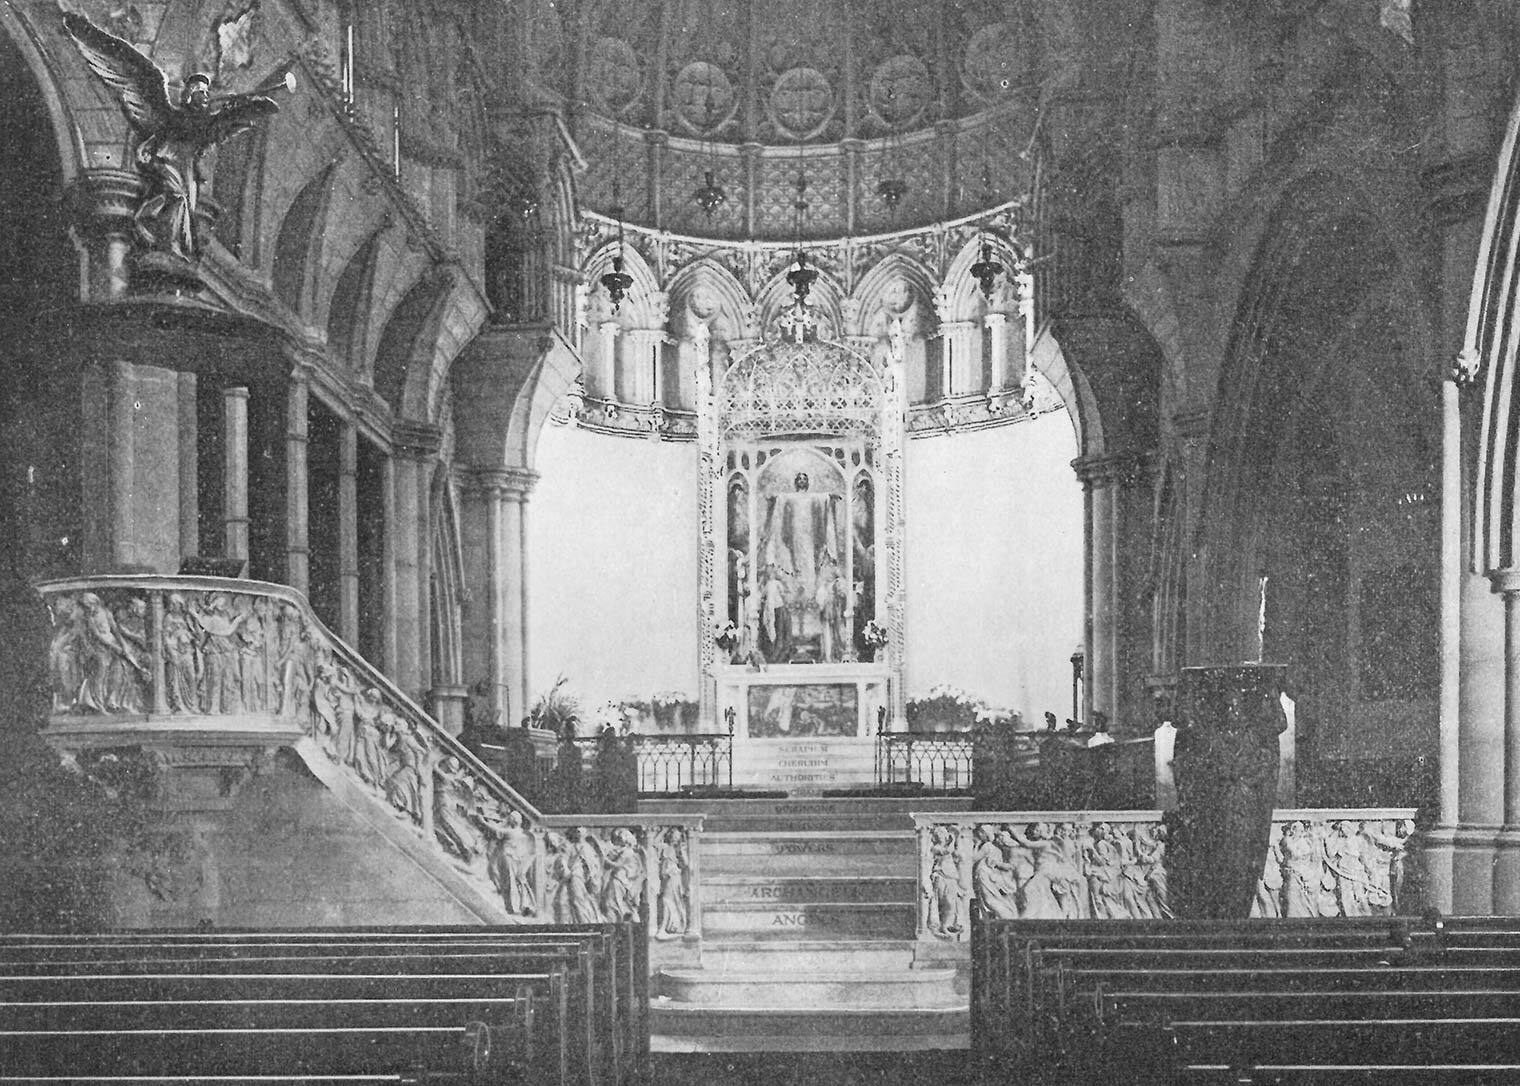 An old photo of an ornate church interior